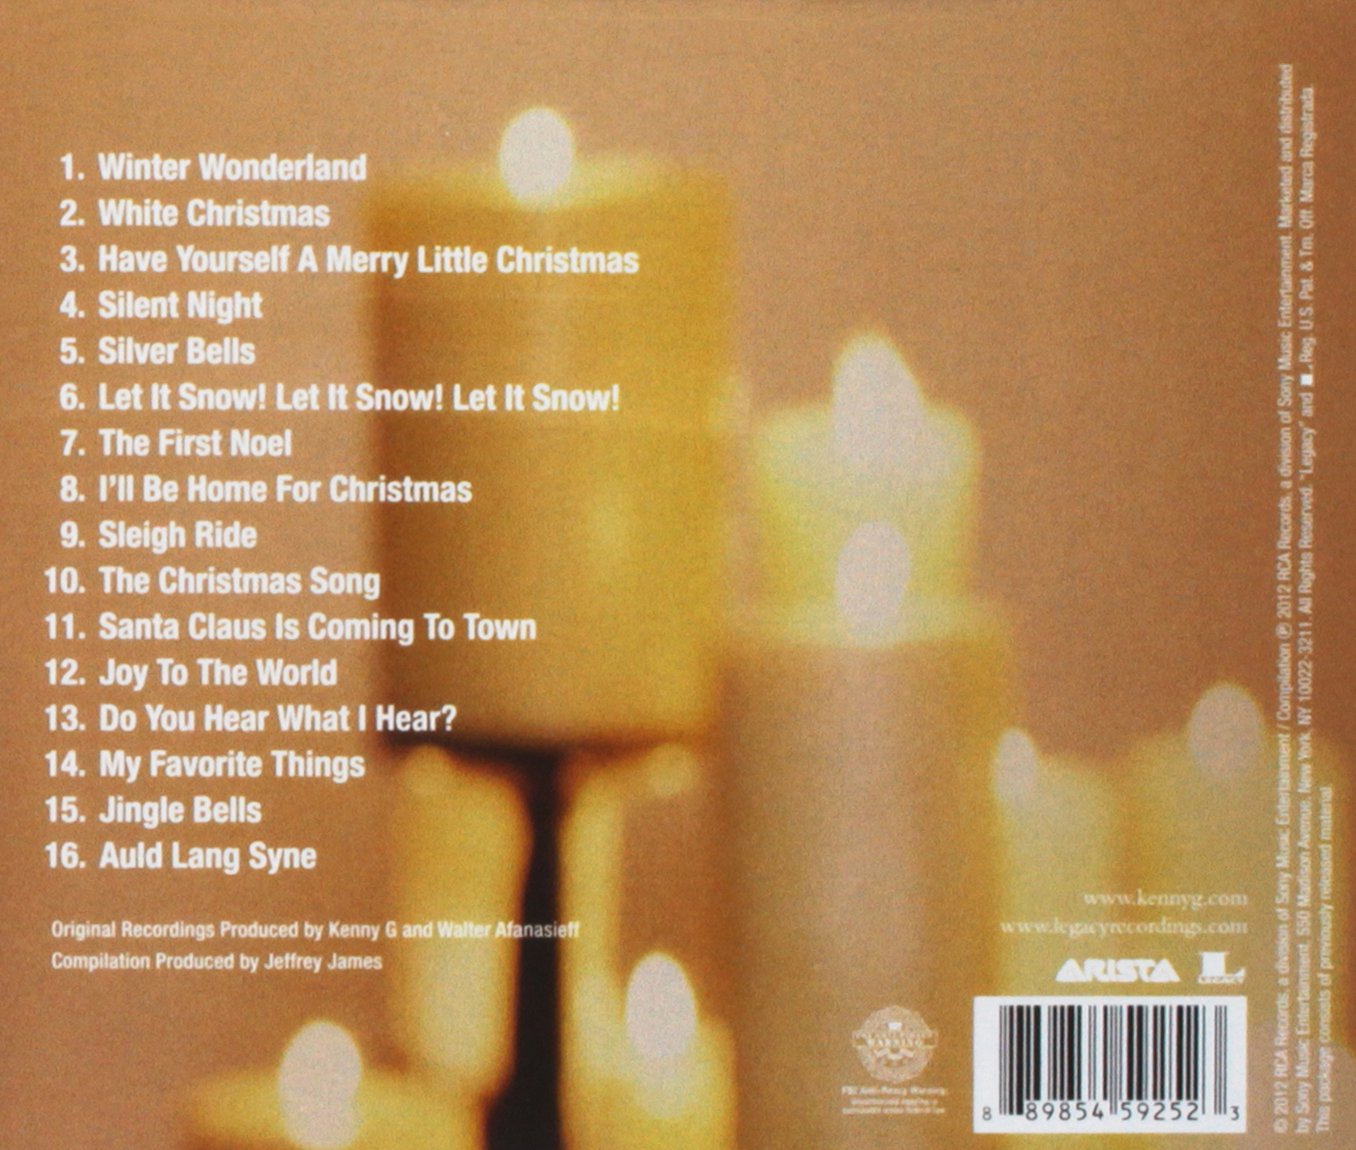 KENNY G: The Classic Christmas Album